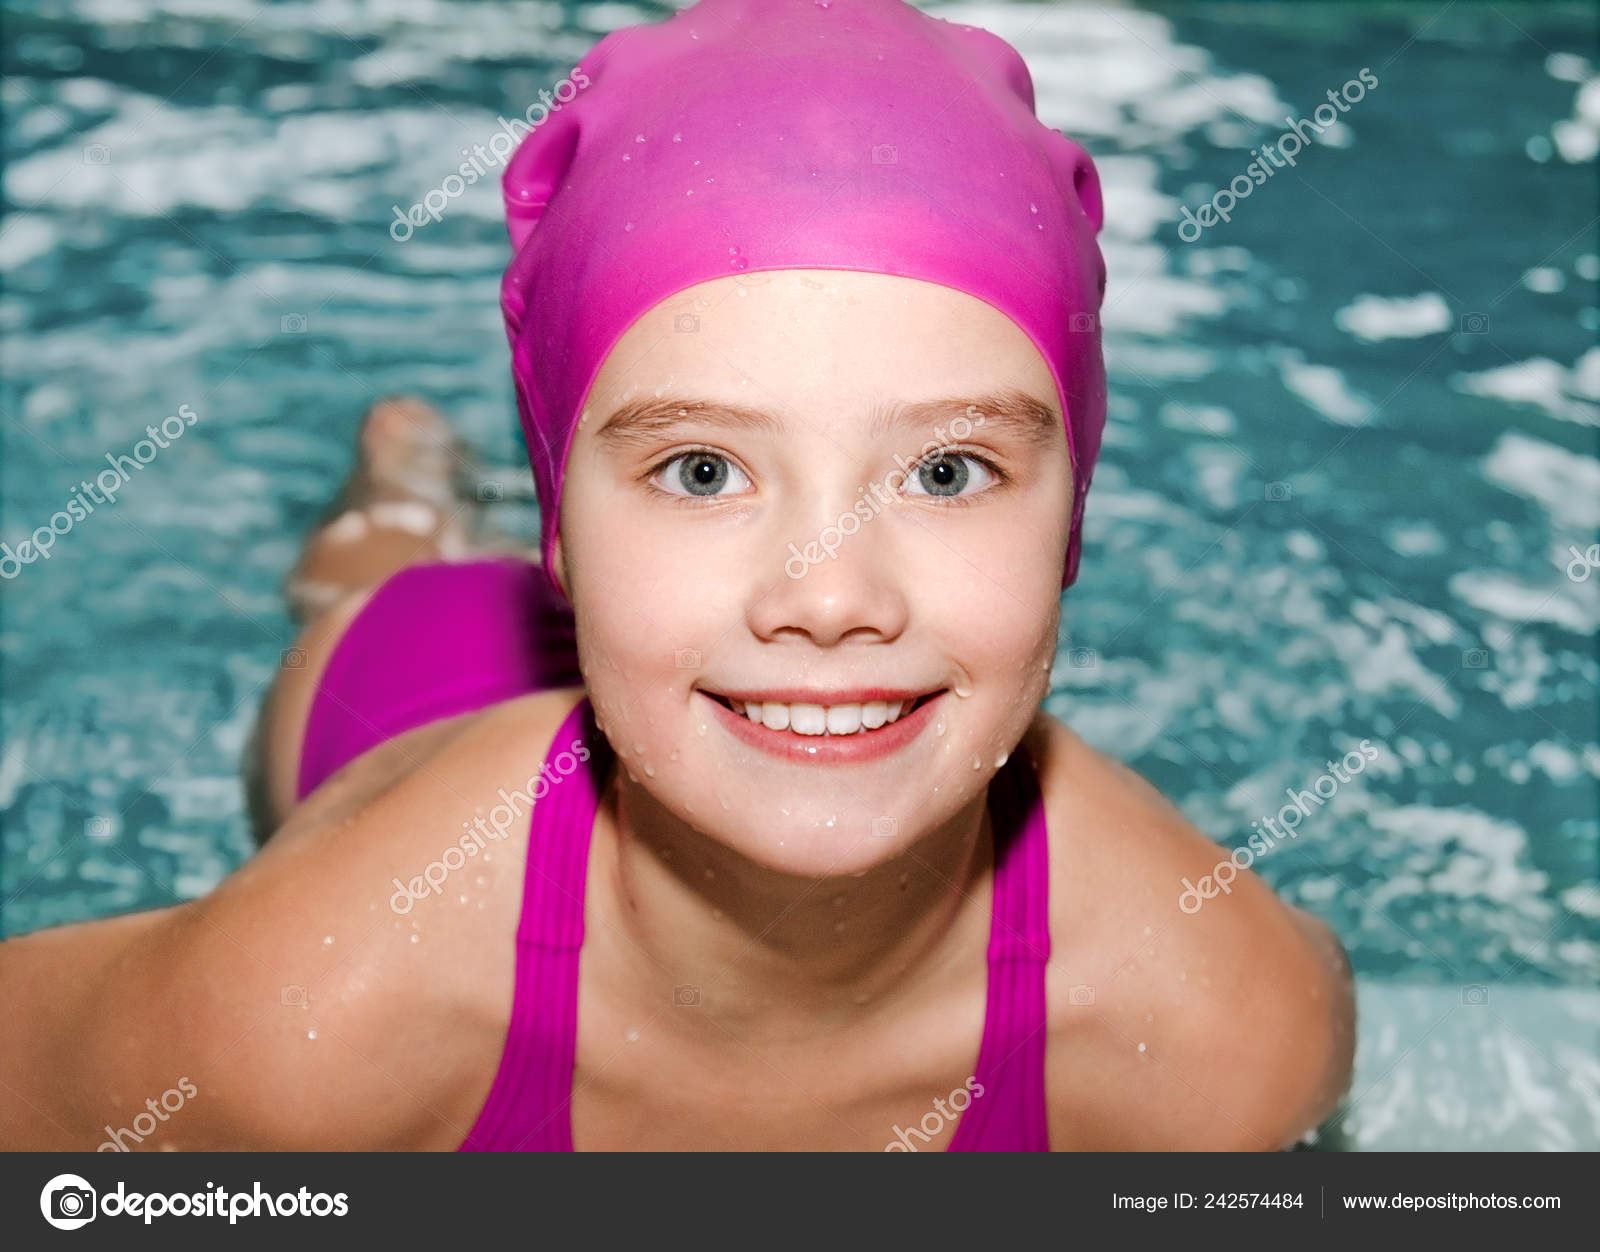 https://st4.depositphotos.com/1276052/24257/i/1600/depositphotos_242574484-stock-photo-portrait-cute-smiling-little-girl.jpg